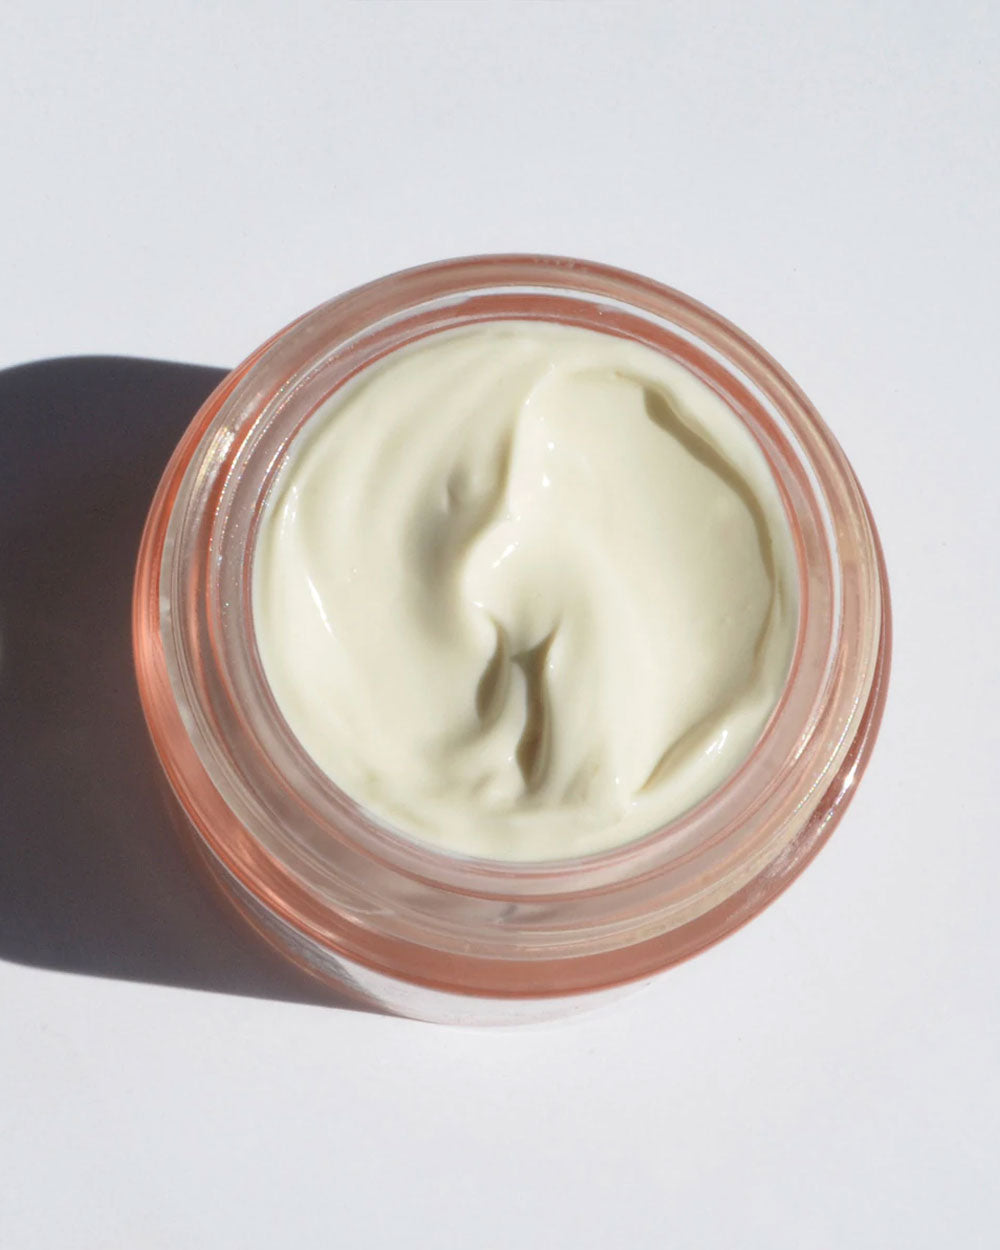 ReVive Skincare Fermitif Neck Renewal Cream